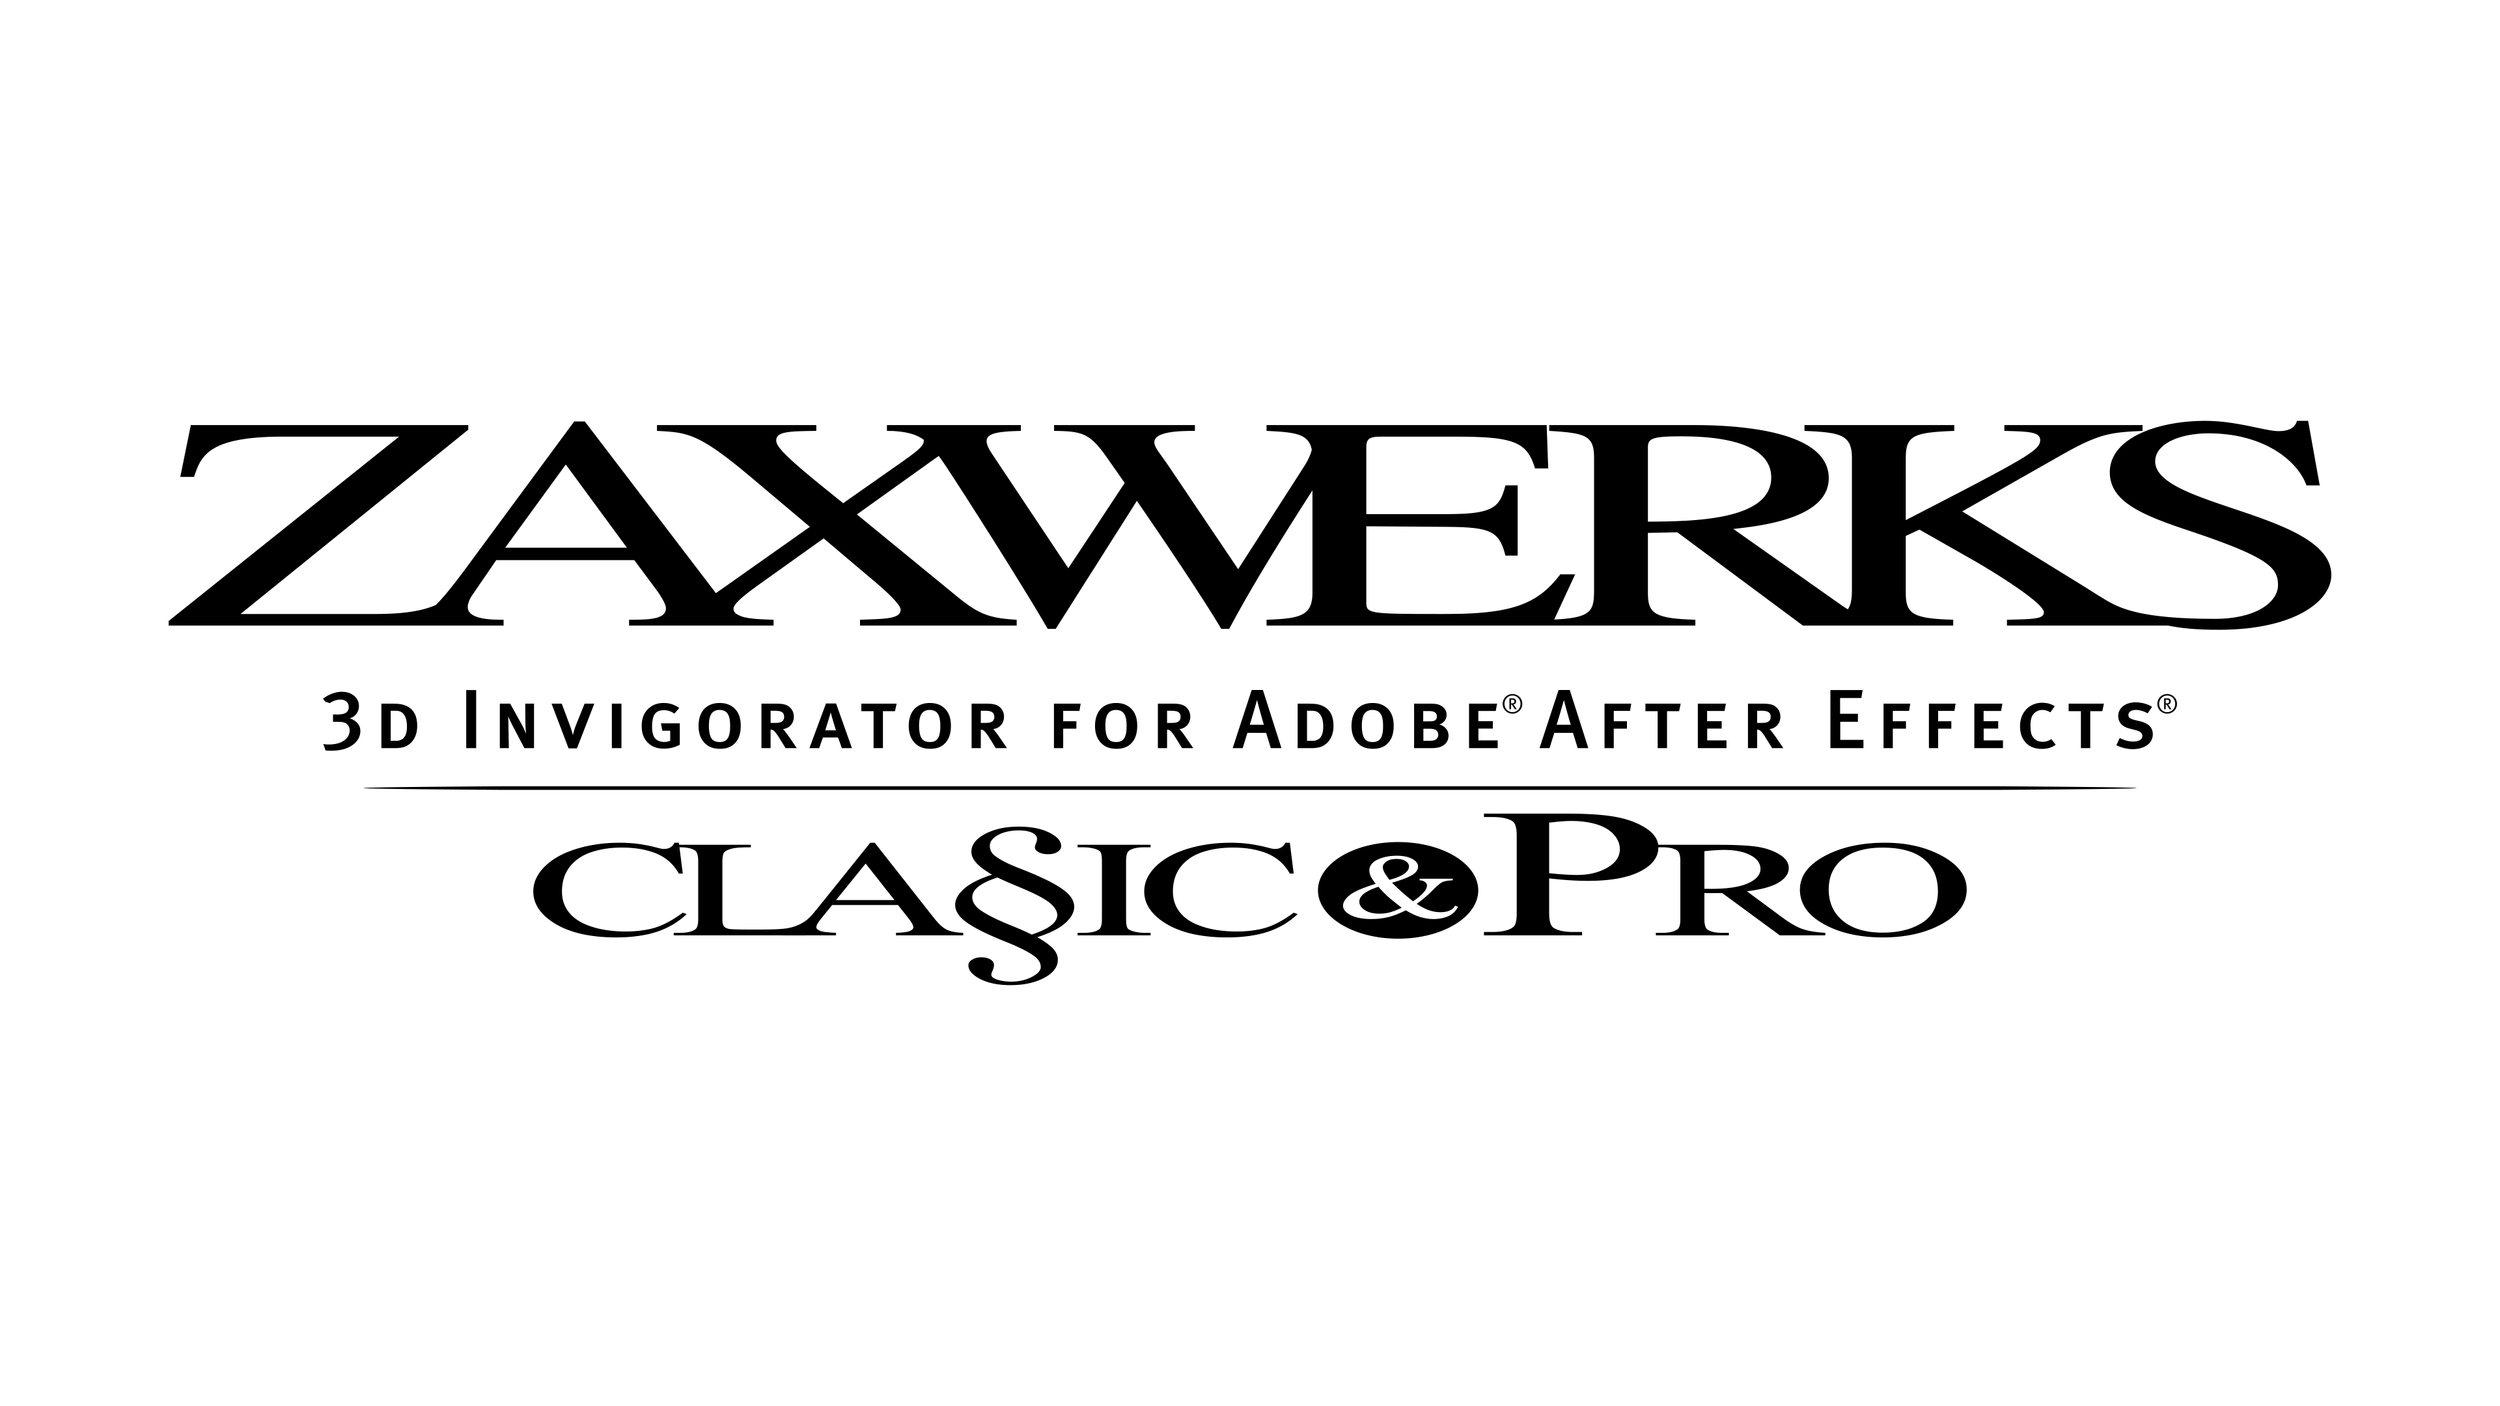 zaxwerks_logotype.png